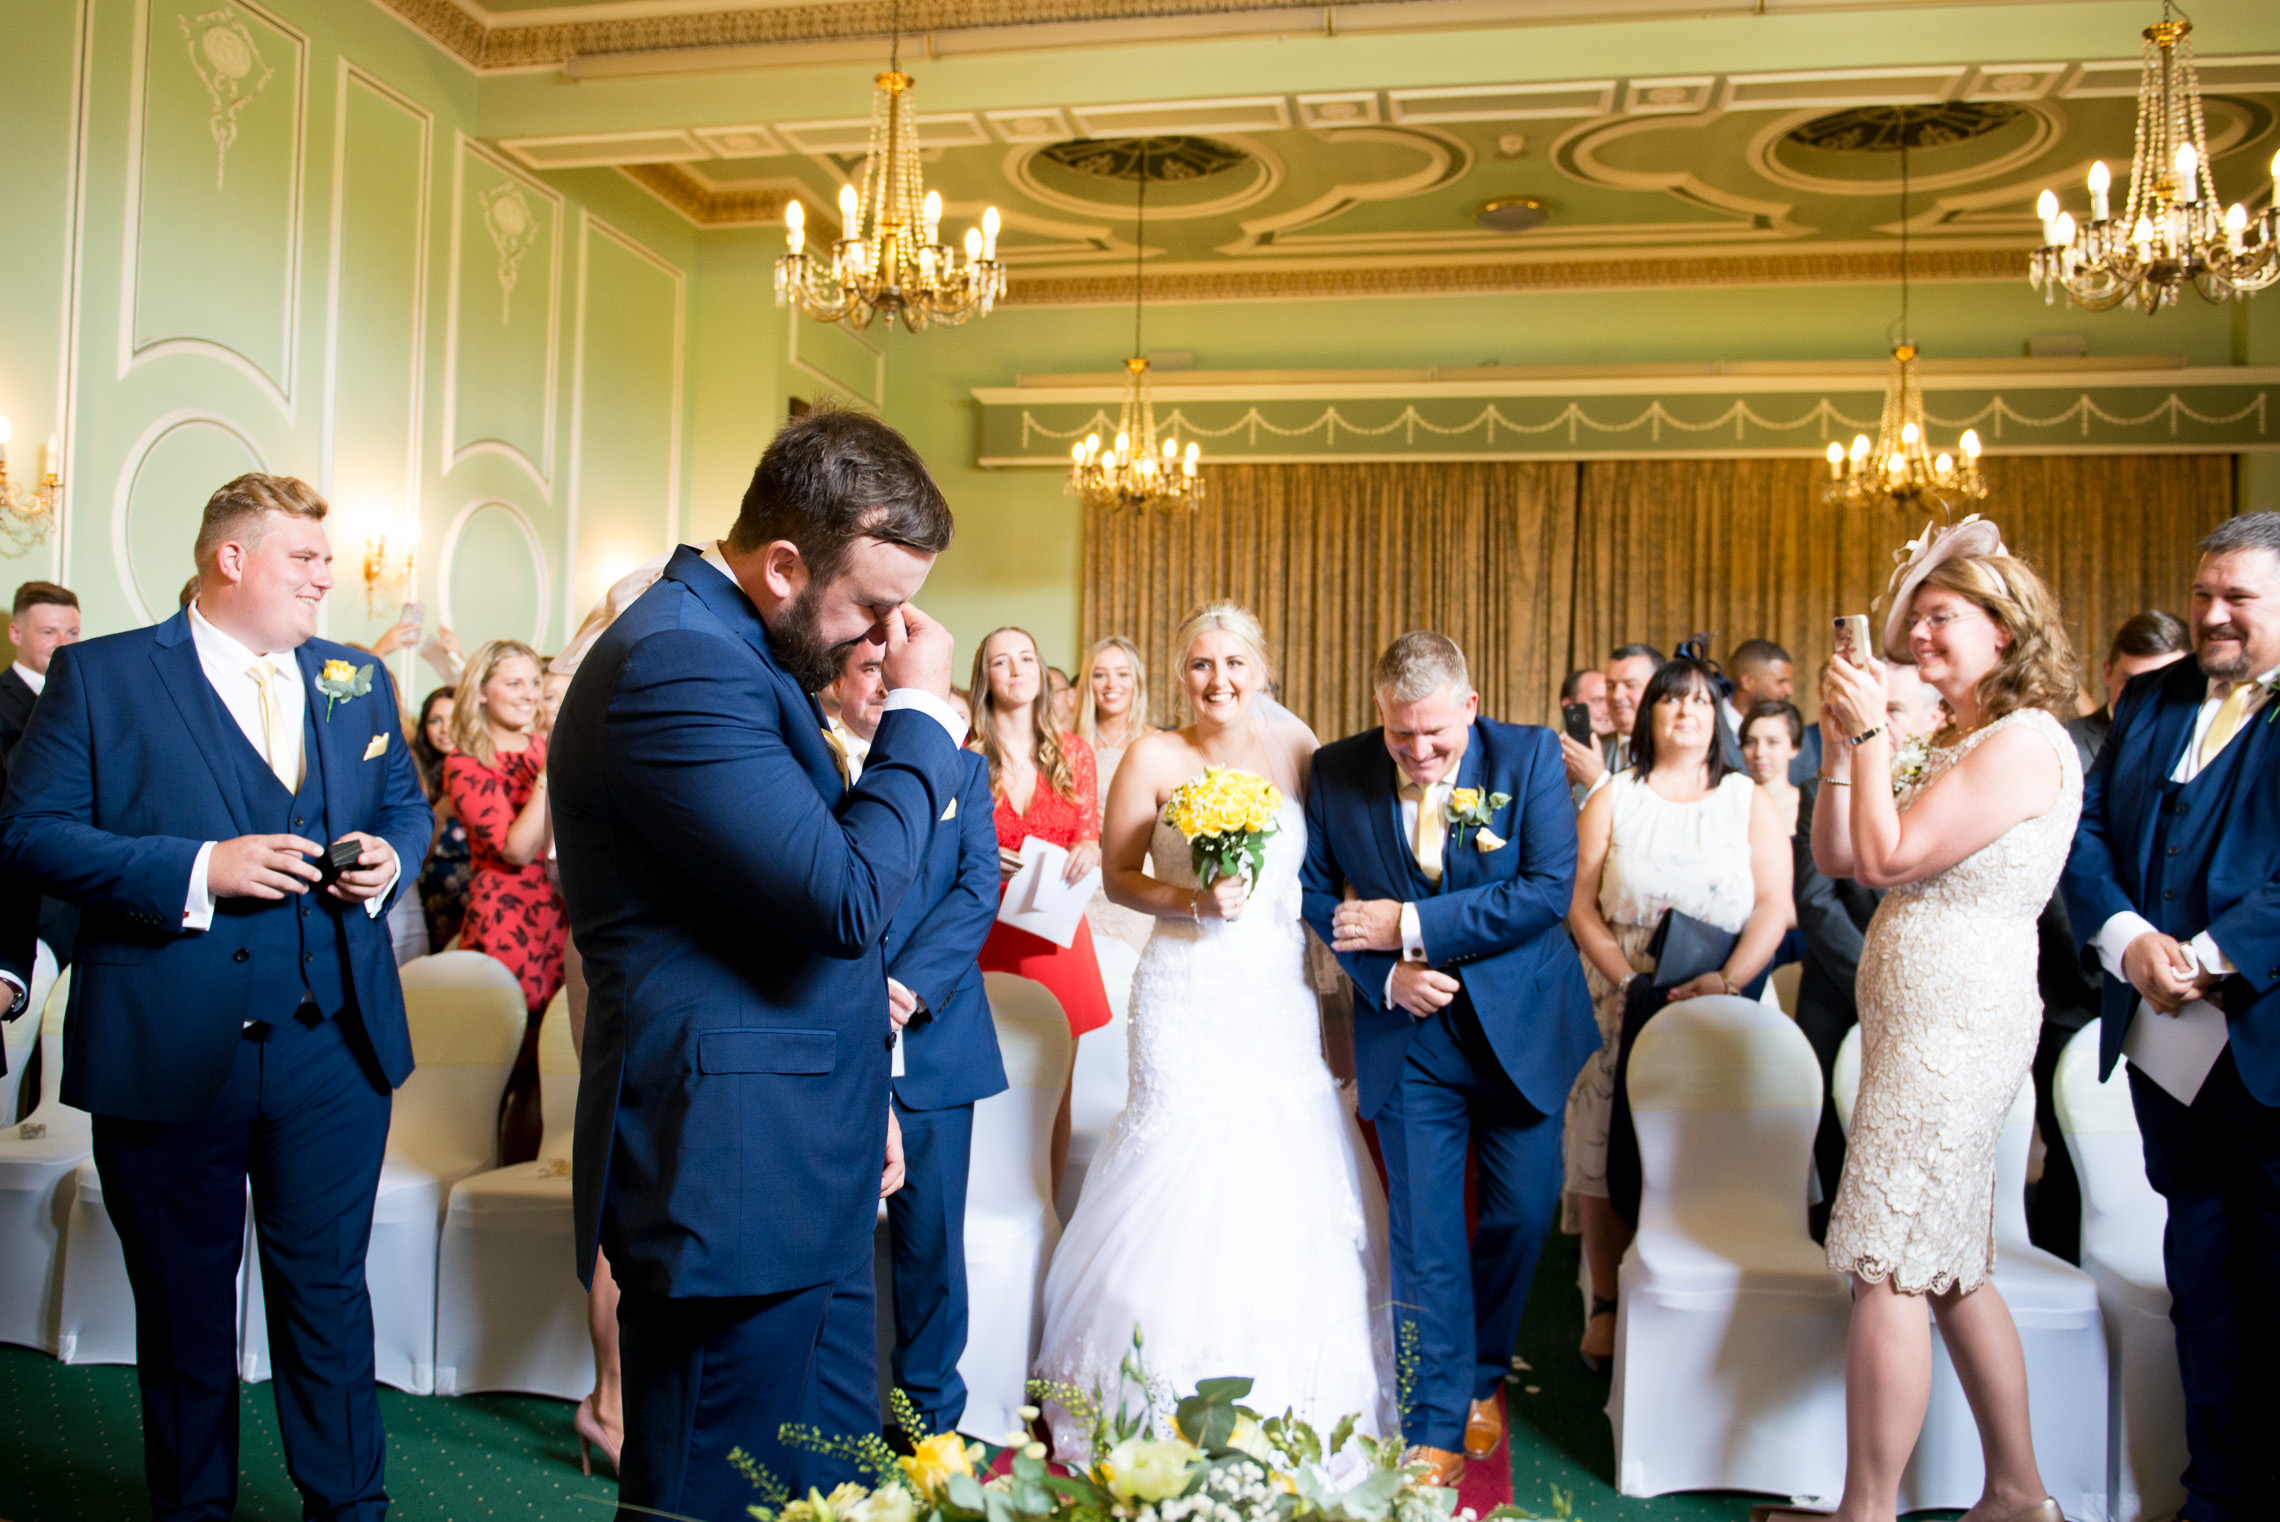 wedding photographer - Bridal entrance and the groom sheds a tear